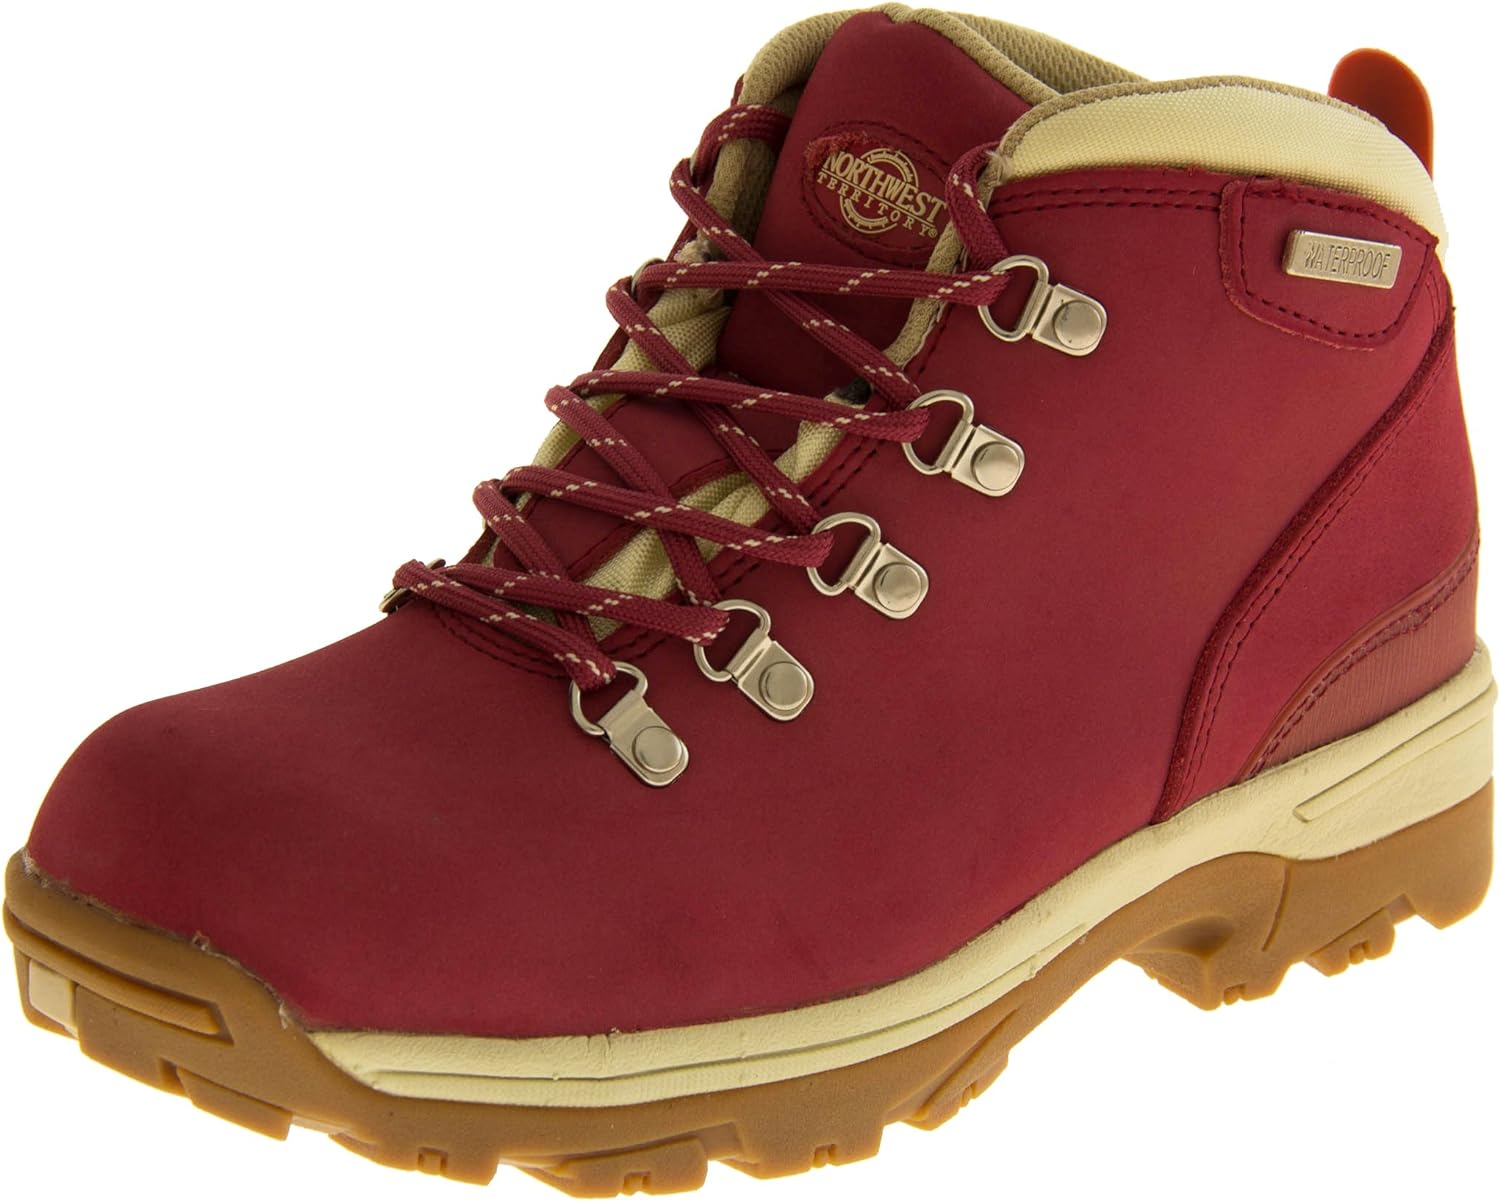 Northwest Territory Trek Waterproof Walking Boots-Reddish